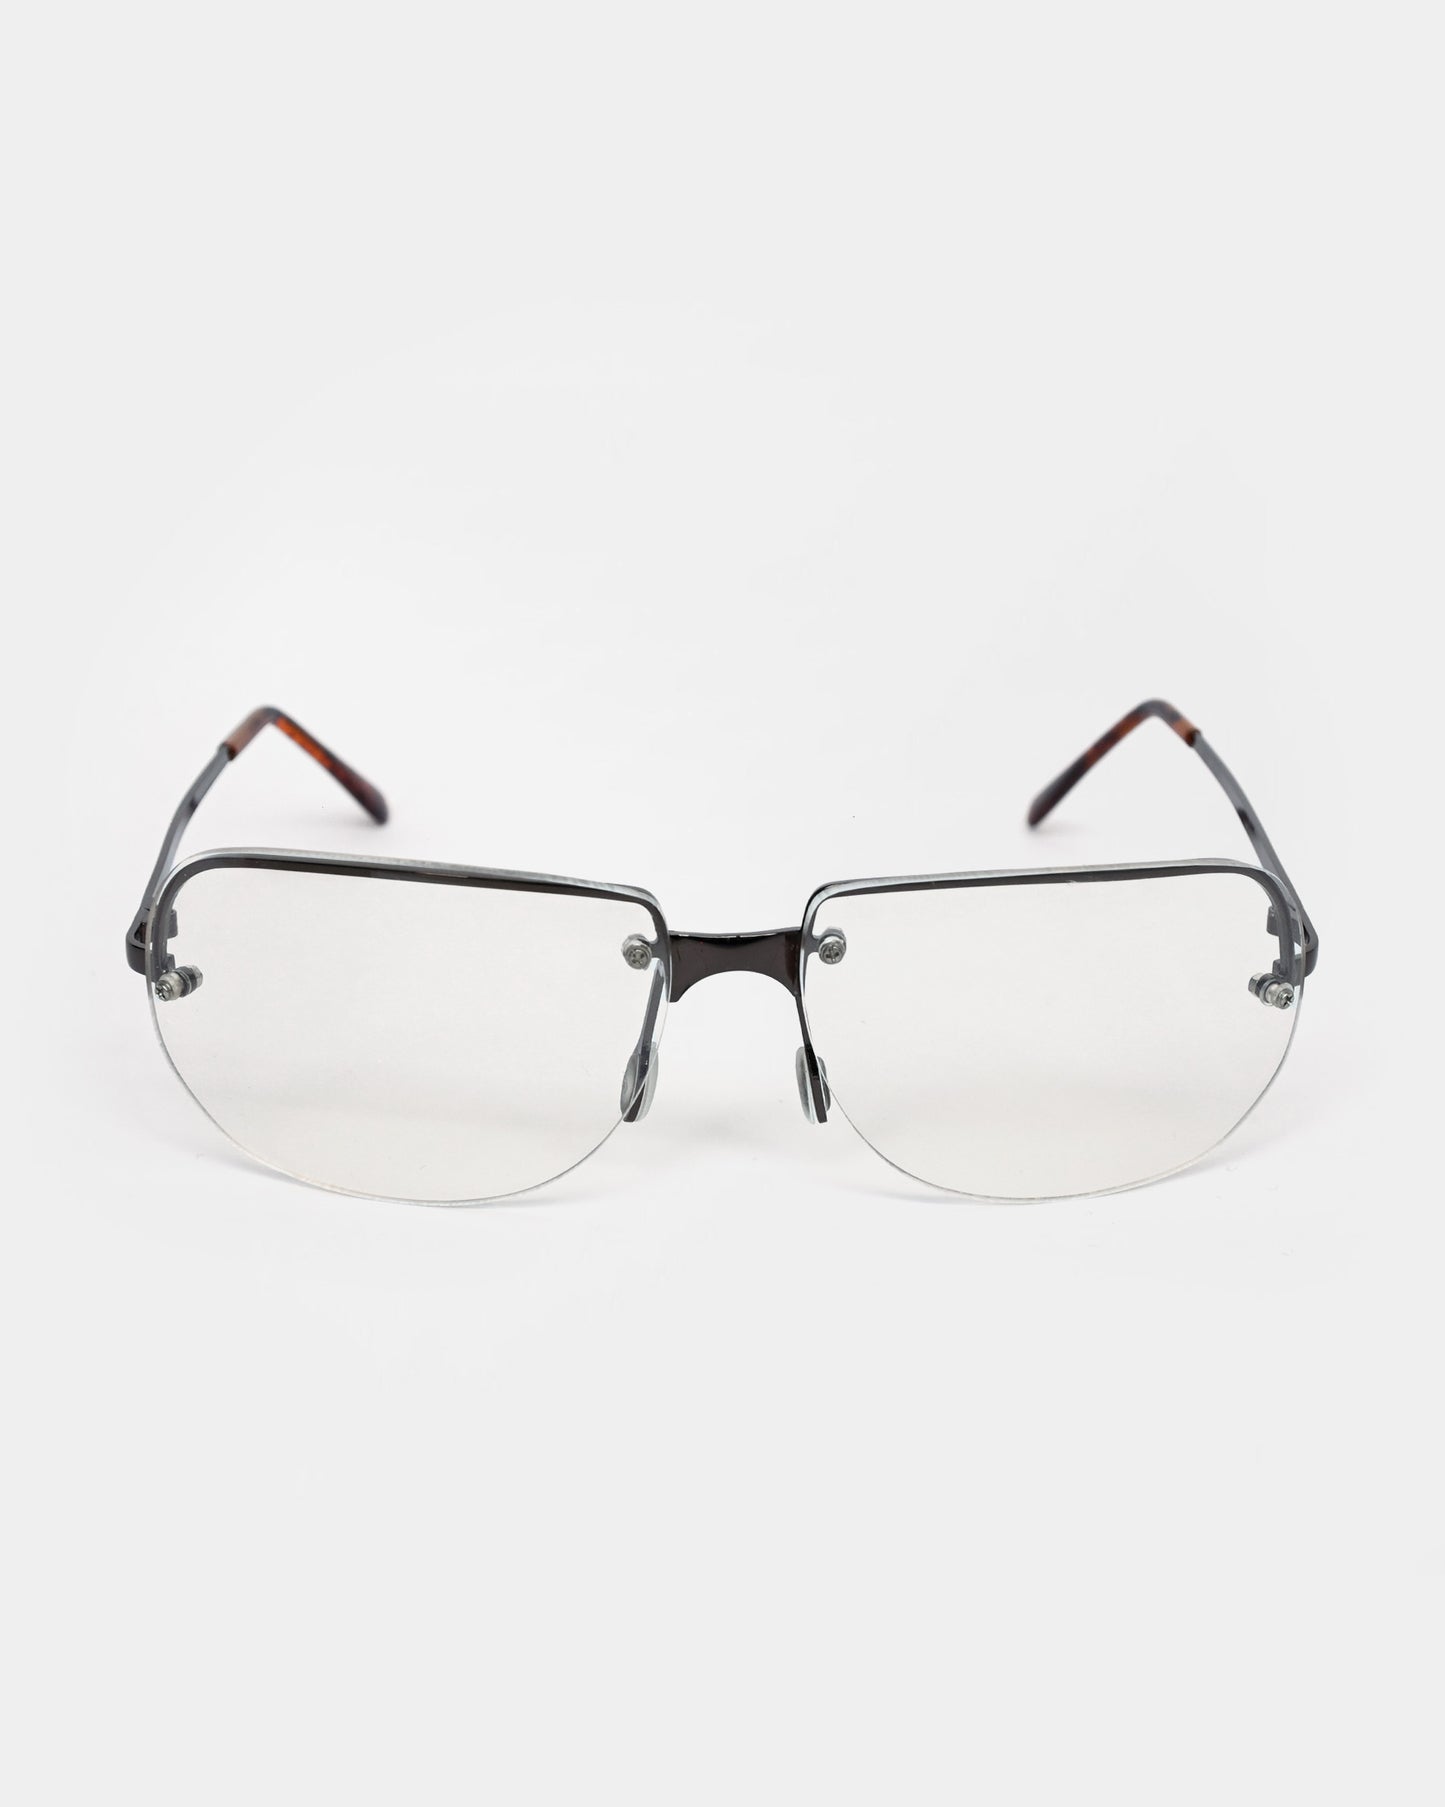 NOS 90s Clear Frameless Sunglasses - Brown